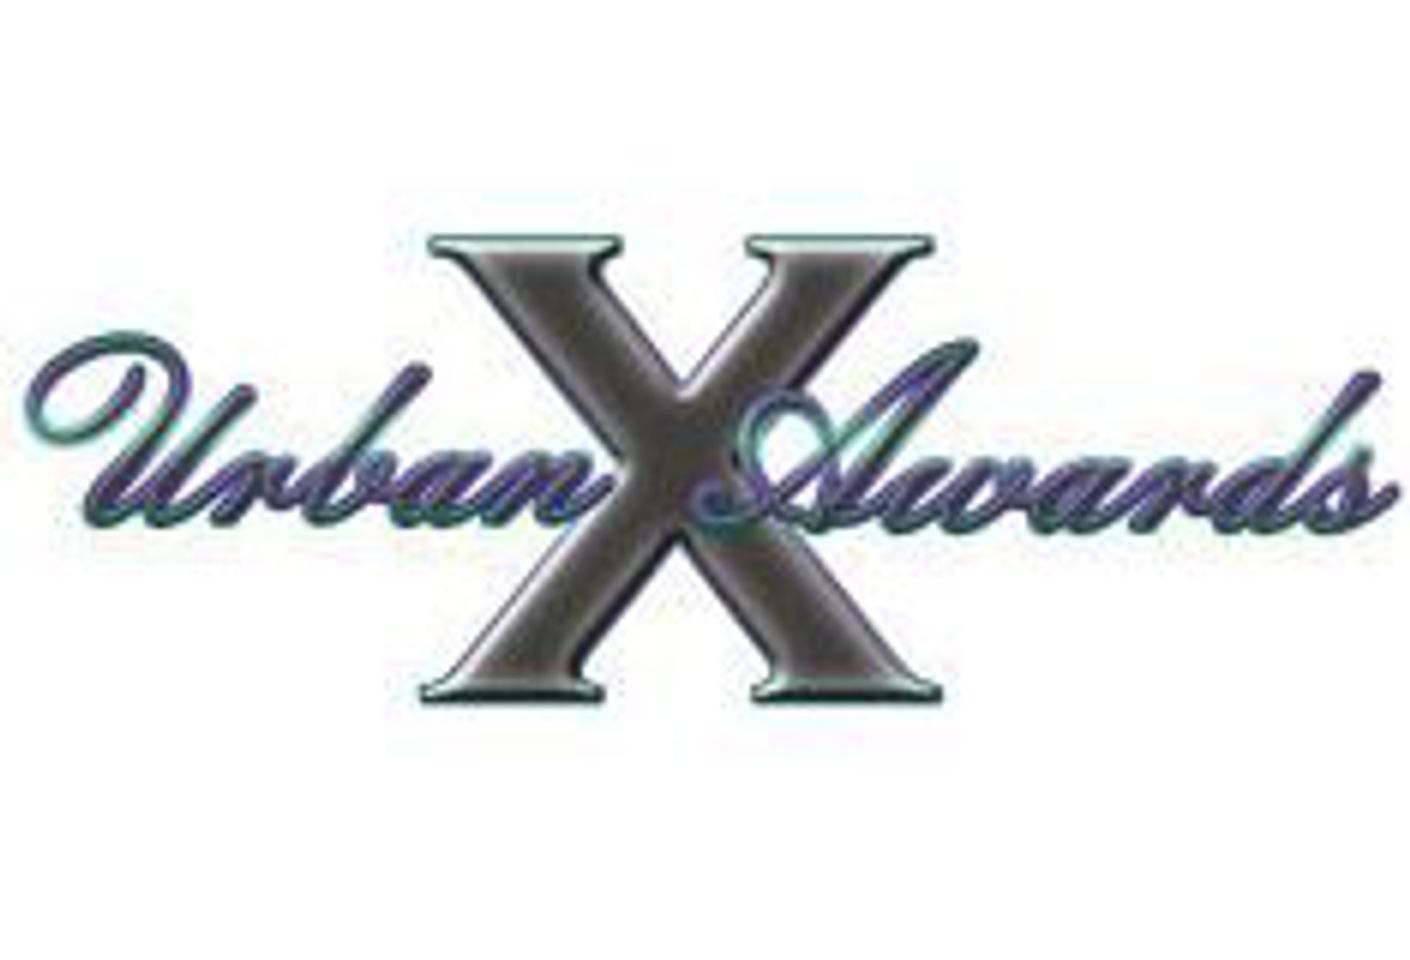 Alexander DeVoe to co-host Urban X Awards